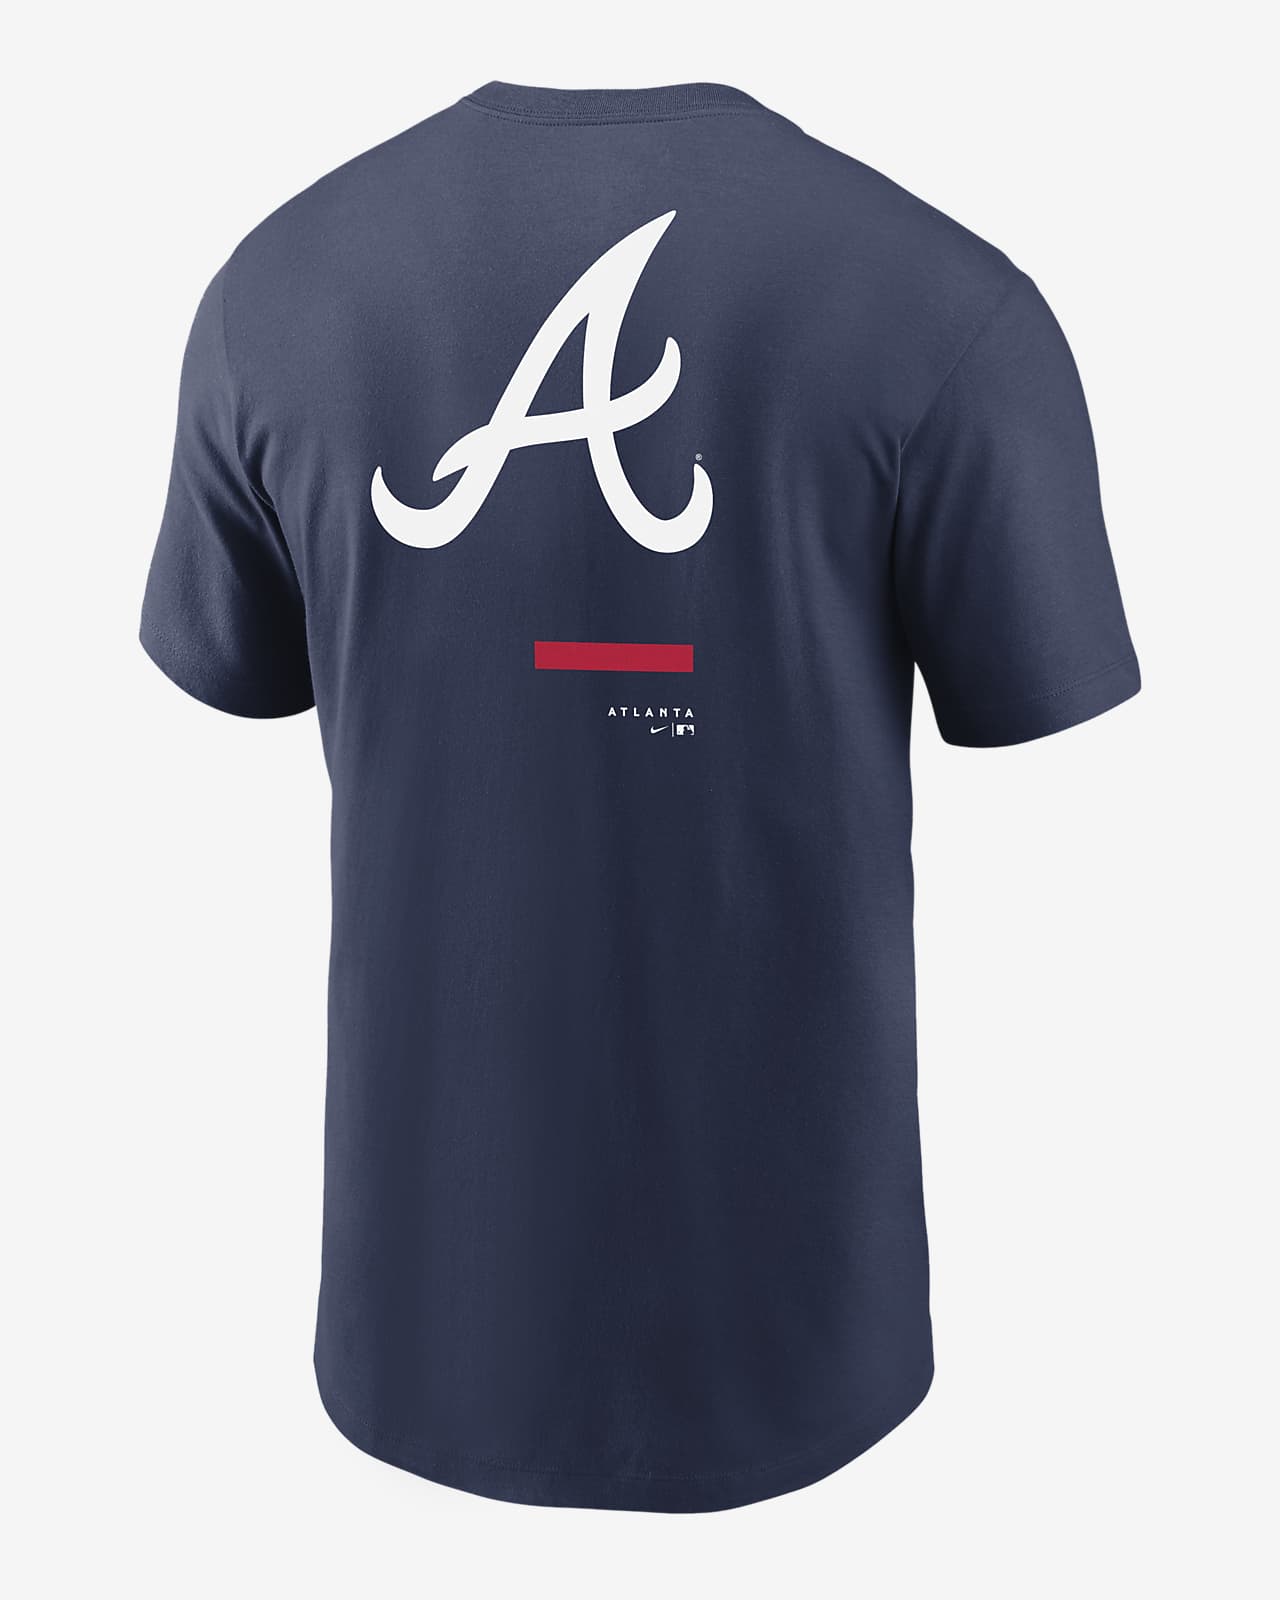 Nike Team Issue (MLB Atlanta Braves) Men's T-Shirt.